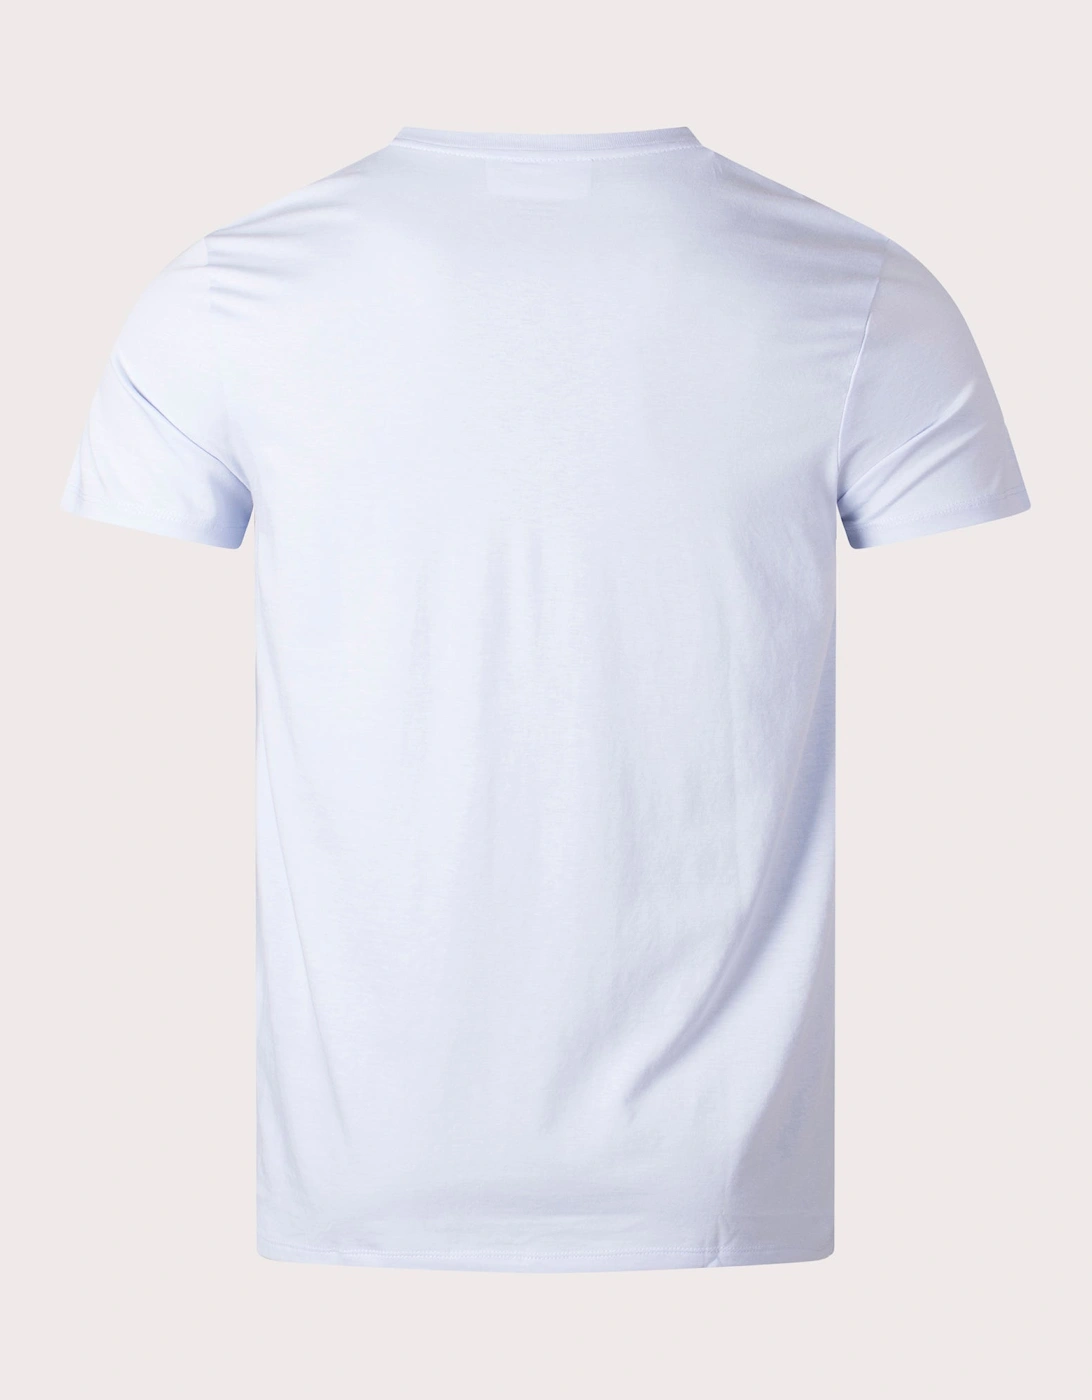 Pima Cotton Croc Logo T-Shirt